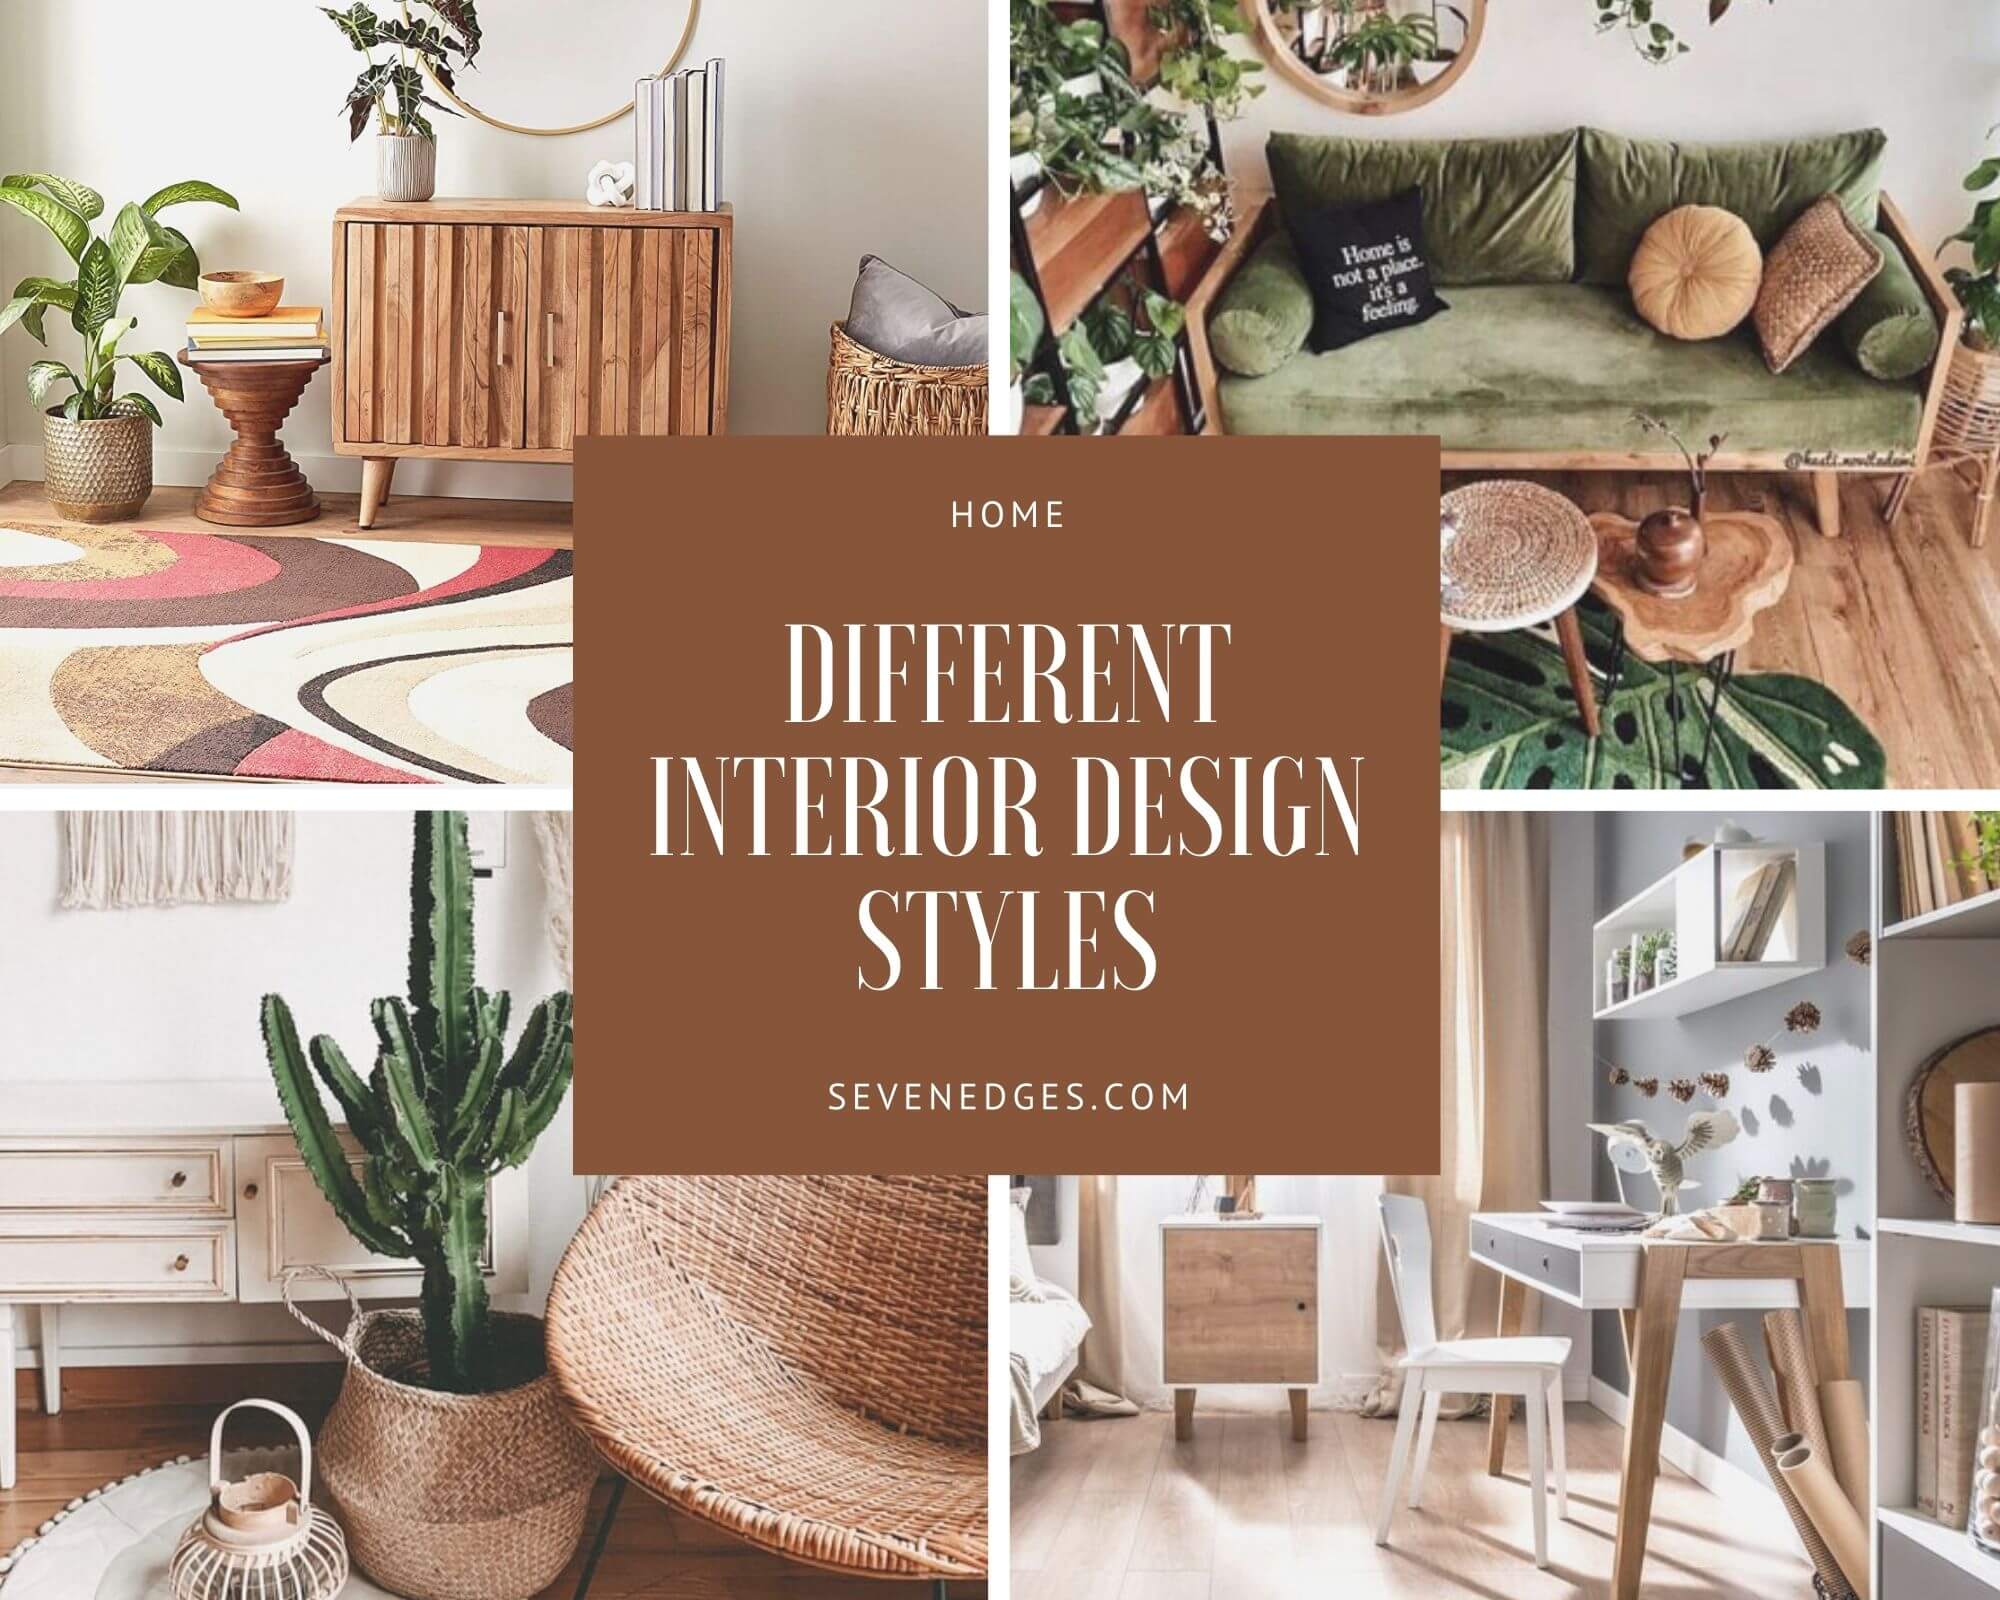 Different interior design styles